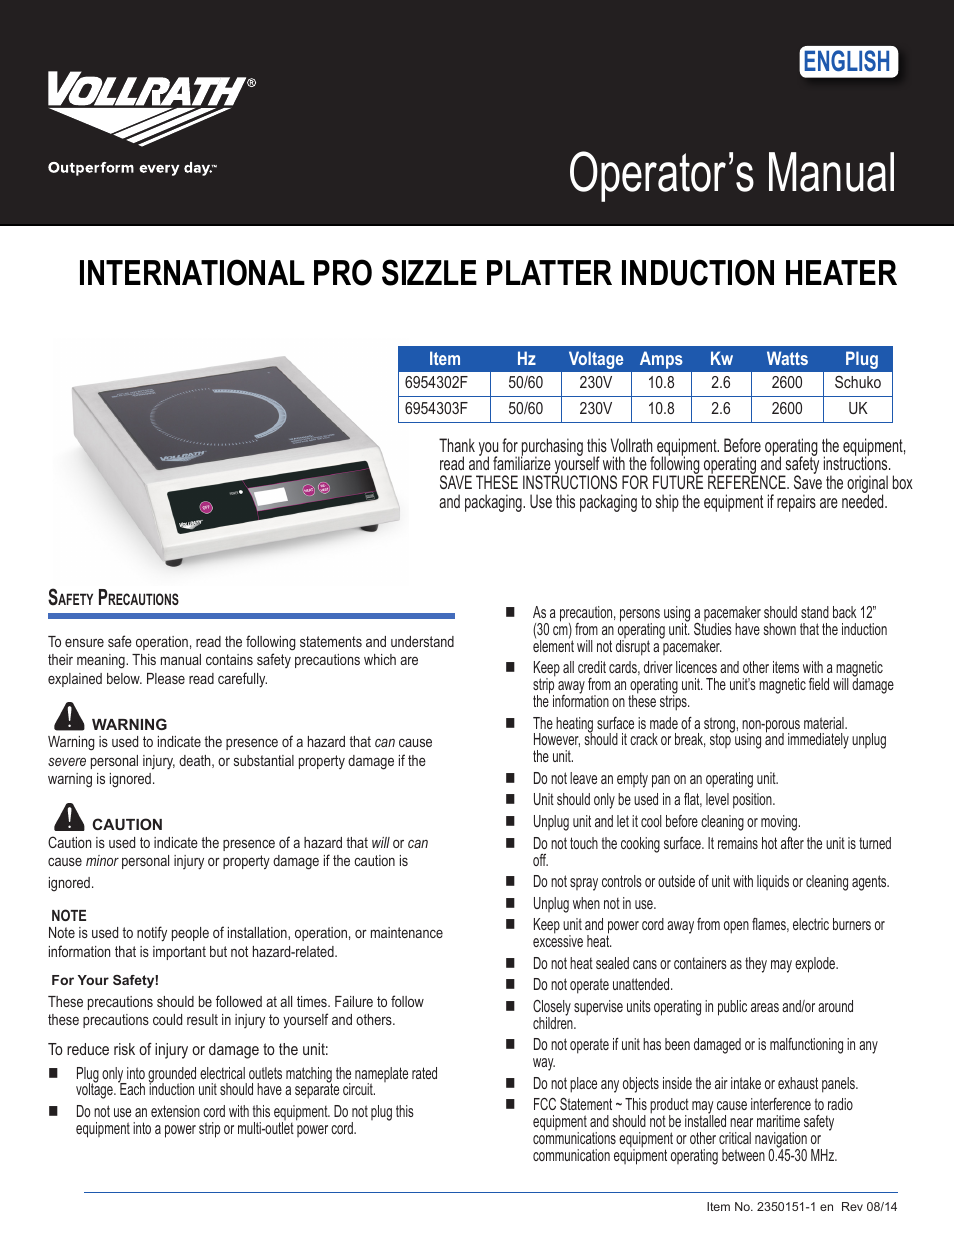 Professional Series 2600 Watt Sizzle Platter Induction Heaters